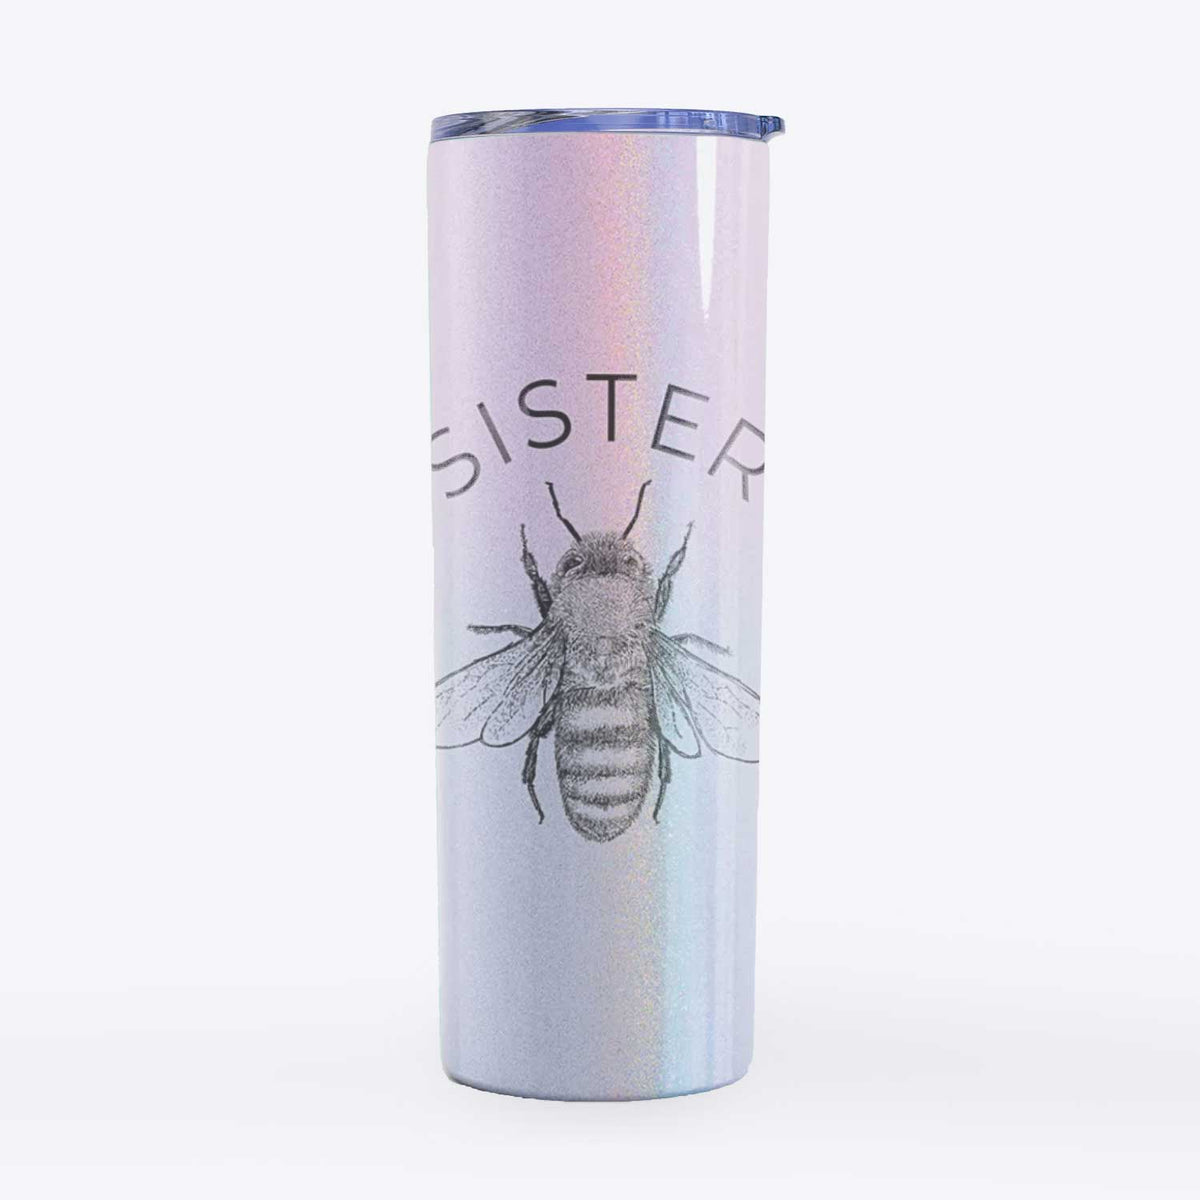 Sister Bee - 20oz Skinny Tumbler